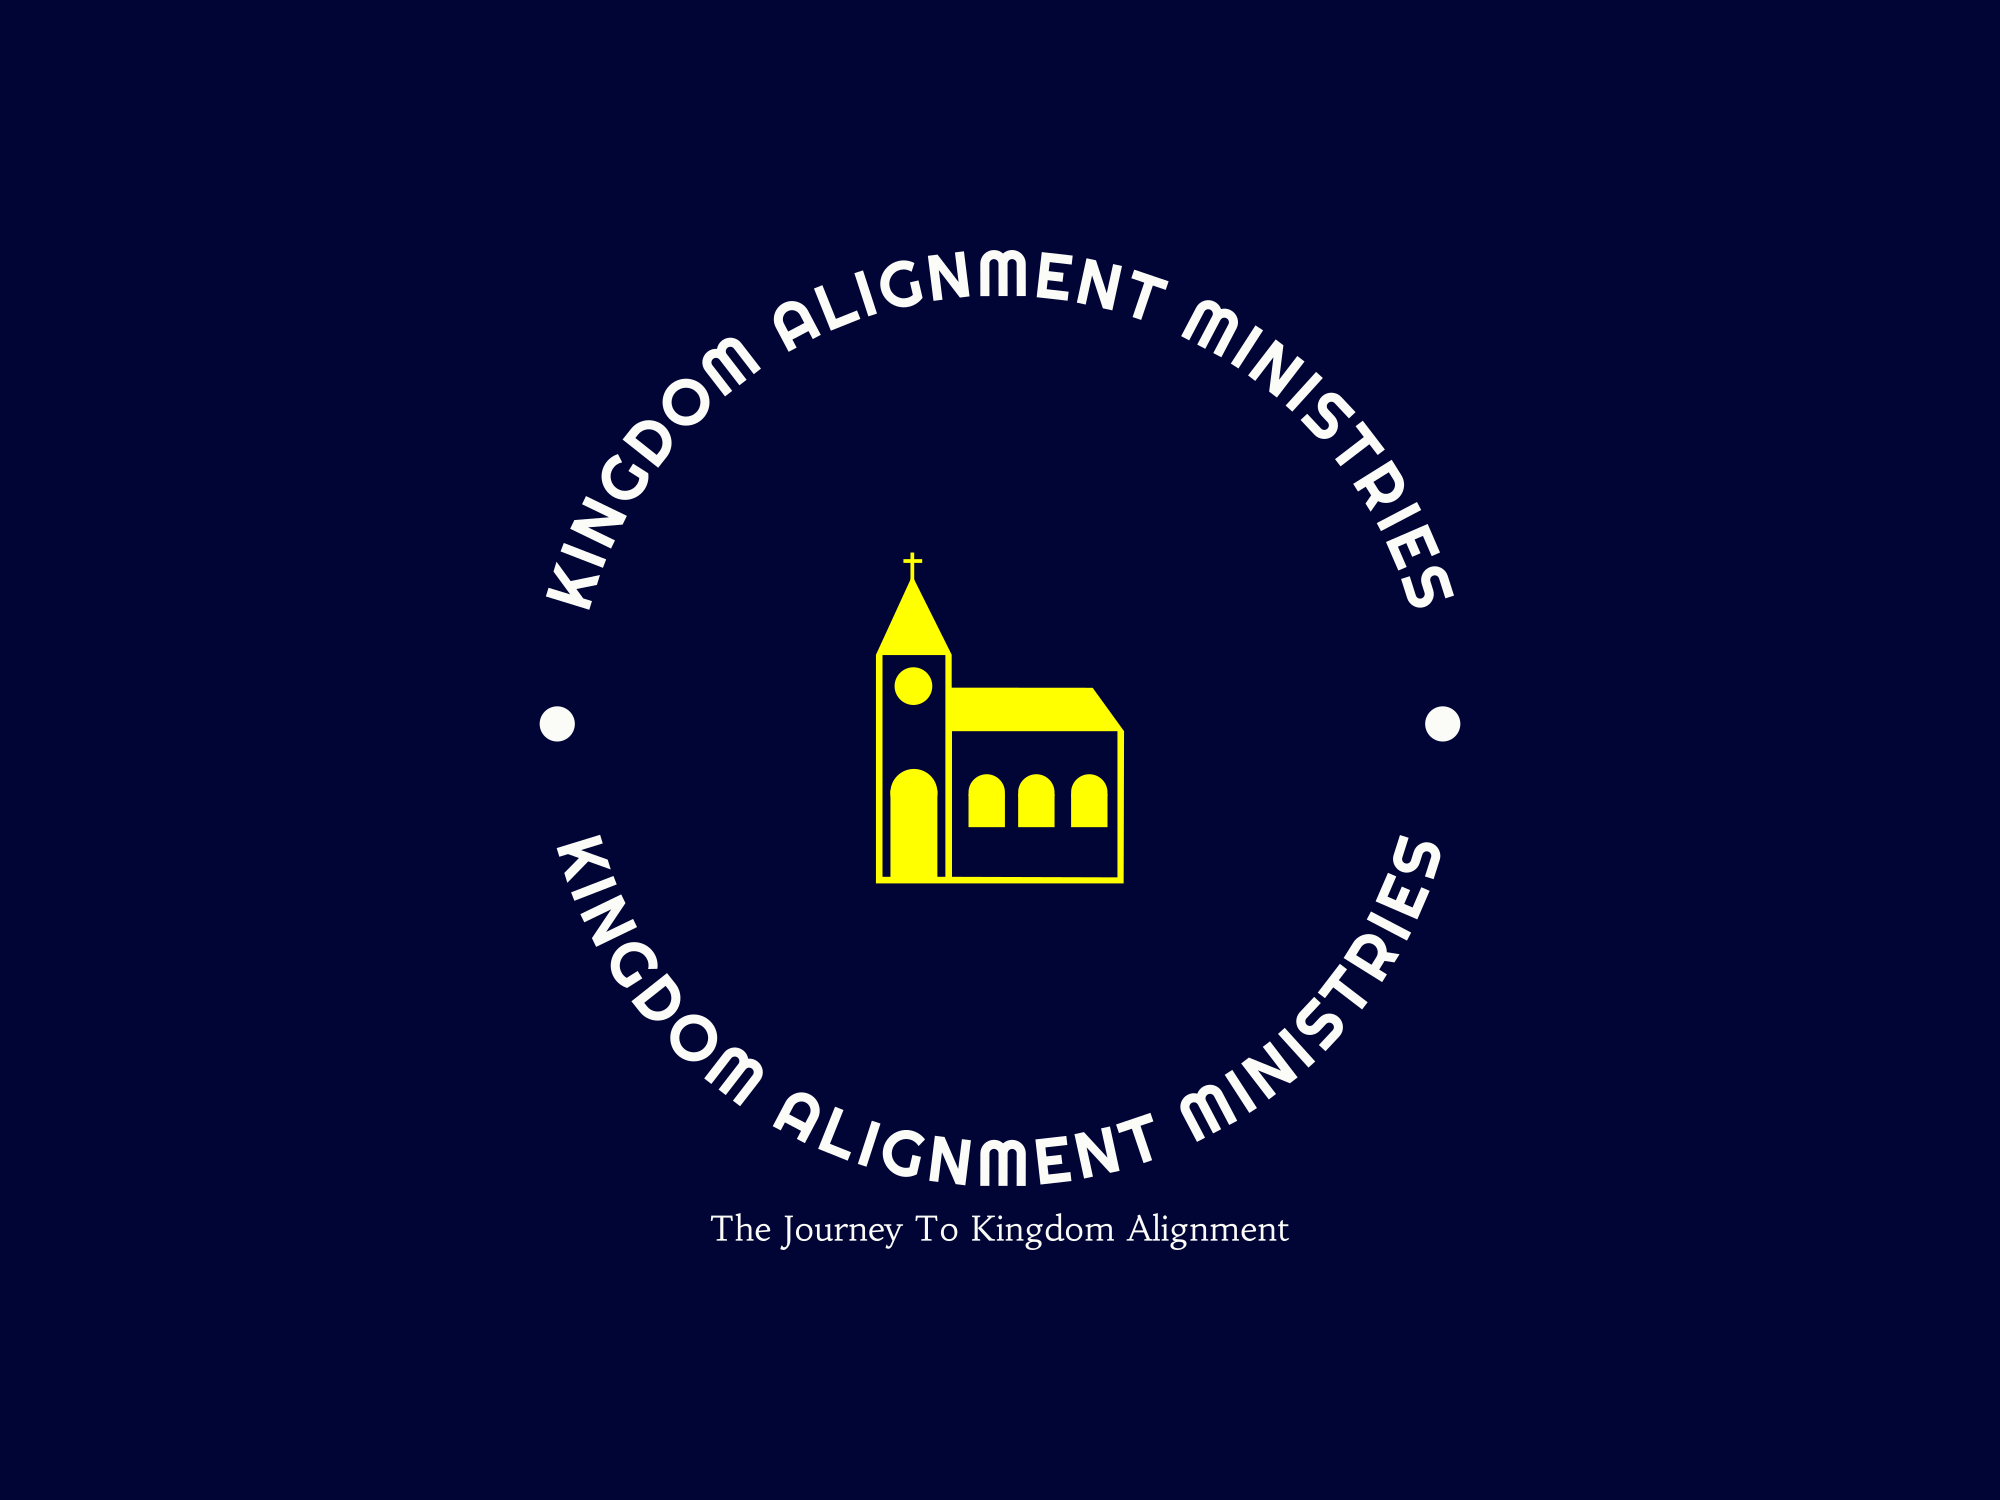 Kingdom Alignment Ministries logo